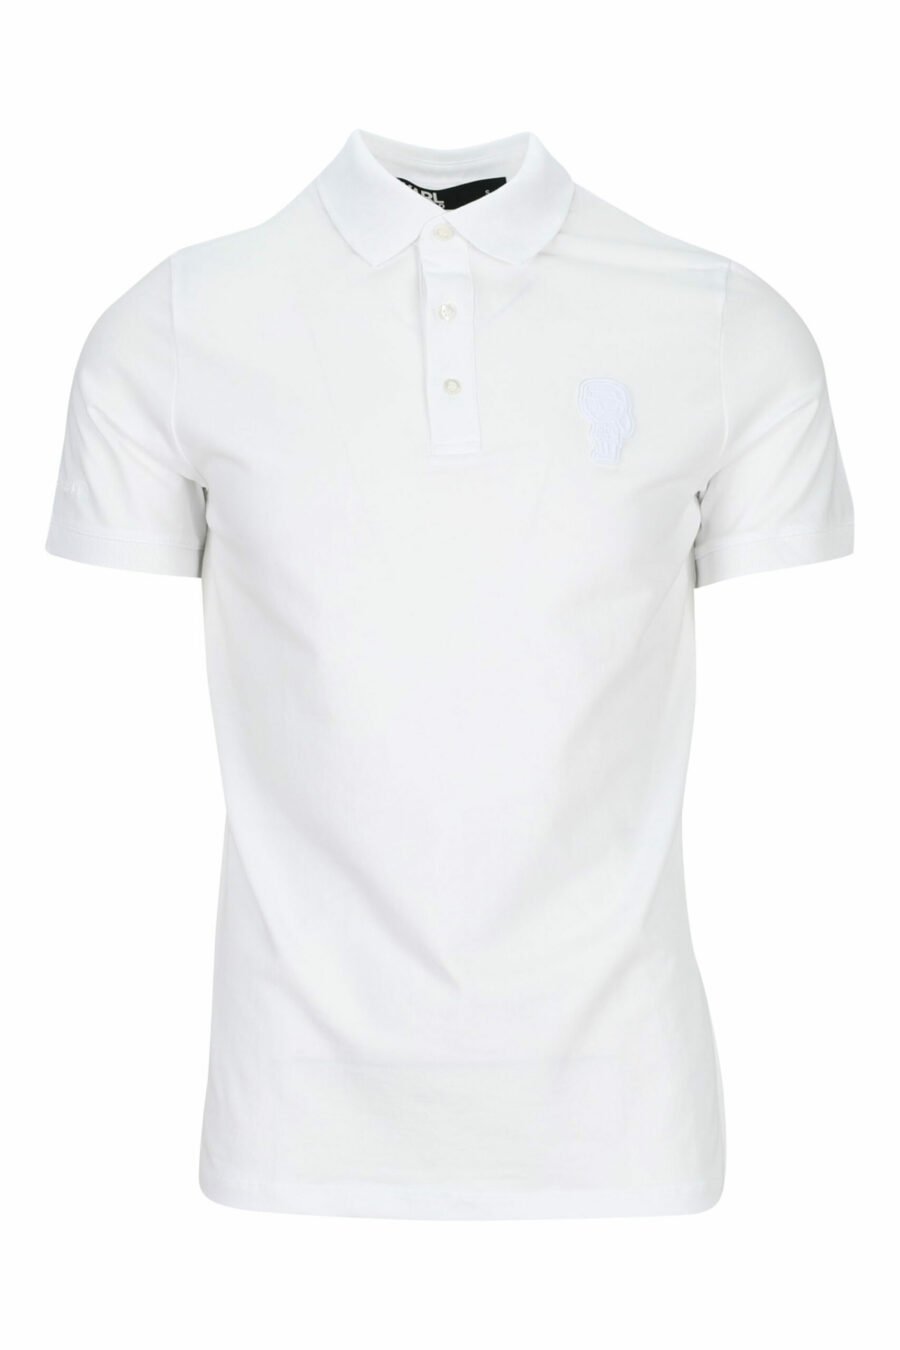 Weißes Poloshirt mit monochromem Mini-Logo - 4062226398312 skaliert